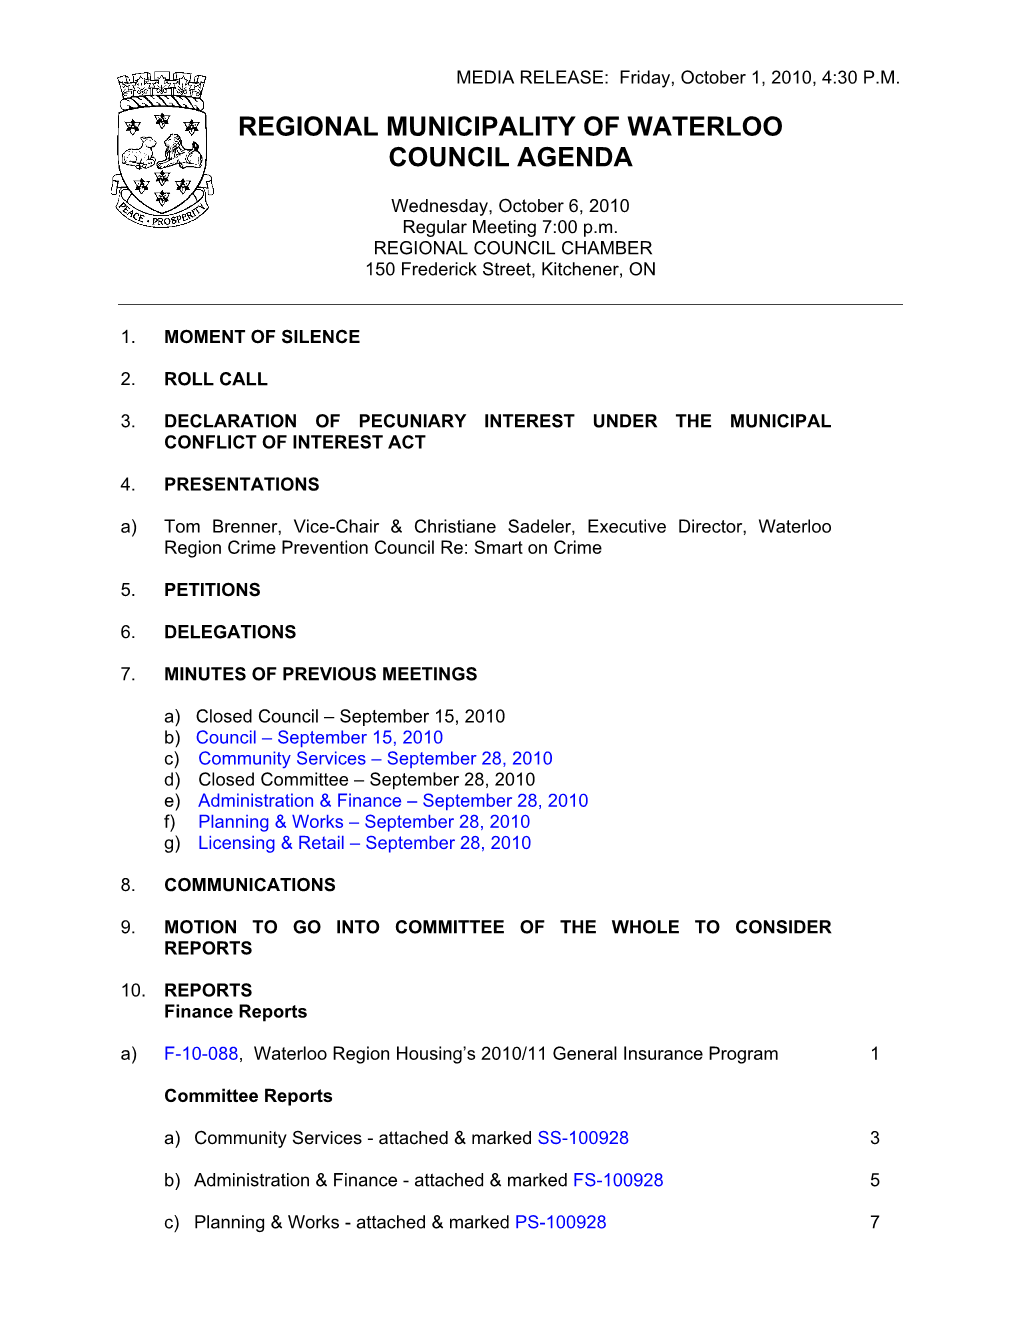 Regional Municipality of Waterloo Council Agenda